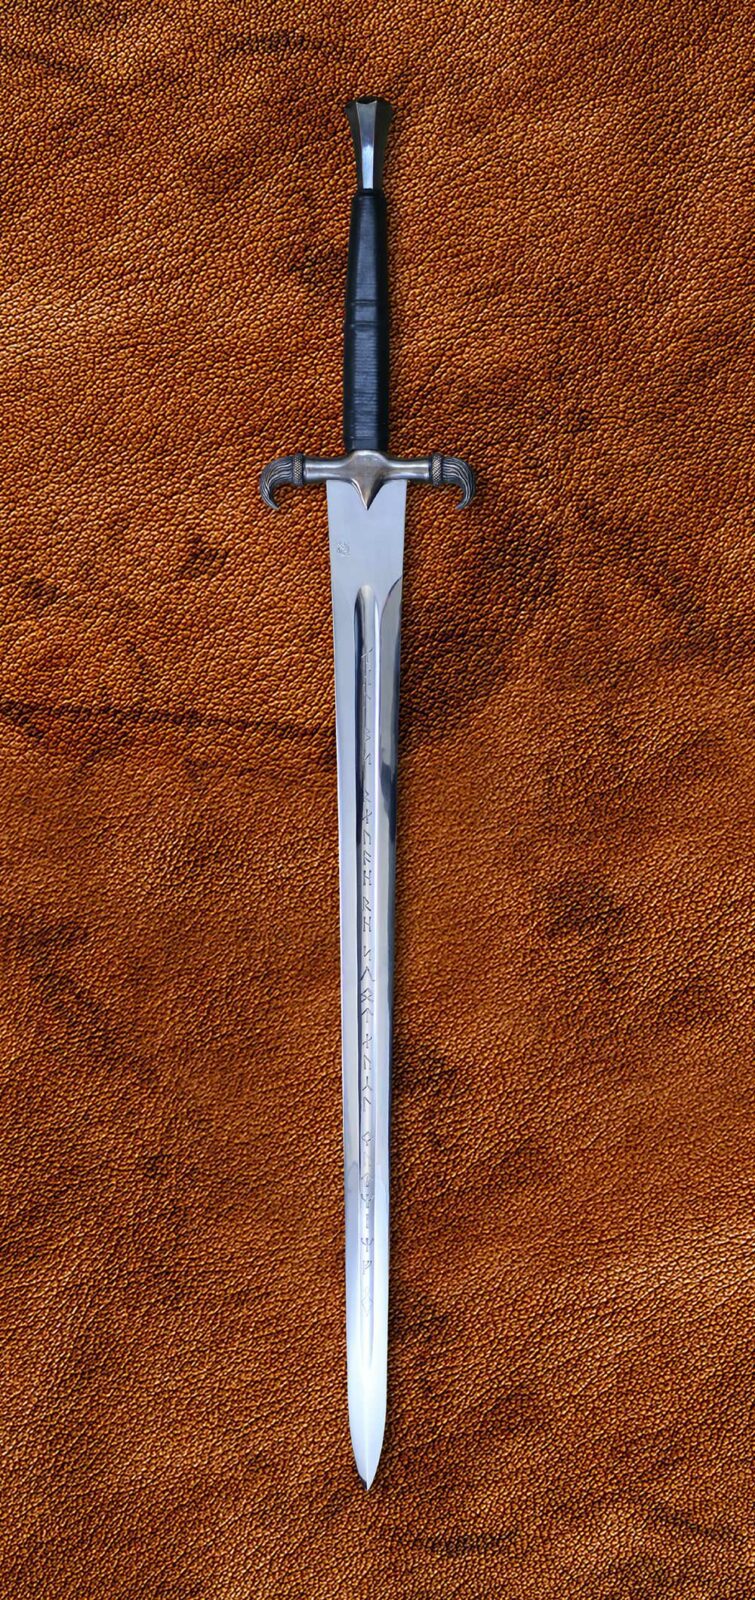 erland-sword-medieval-sweapon-1547